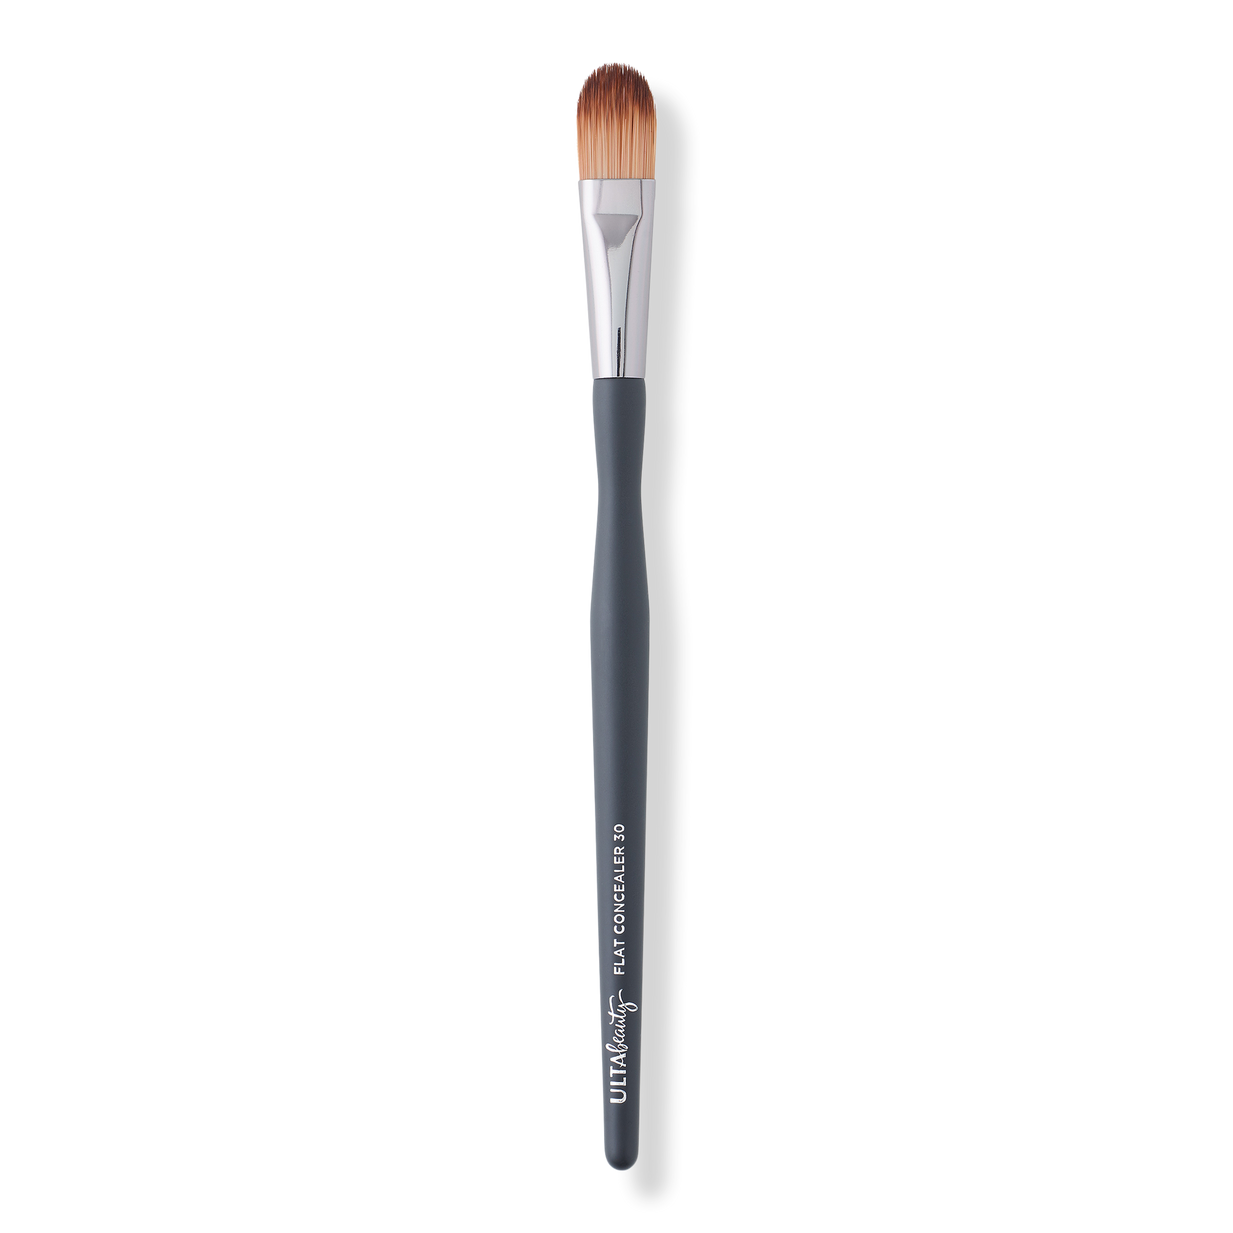 Fiasko noget halvø Flat Concealer Brush #30 - ULTA Beauty Collection | Ulta Beauty